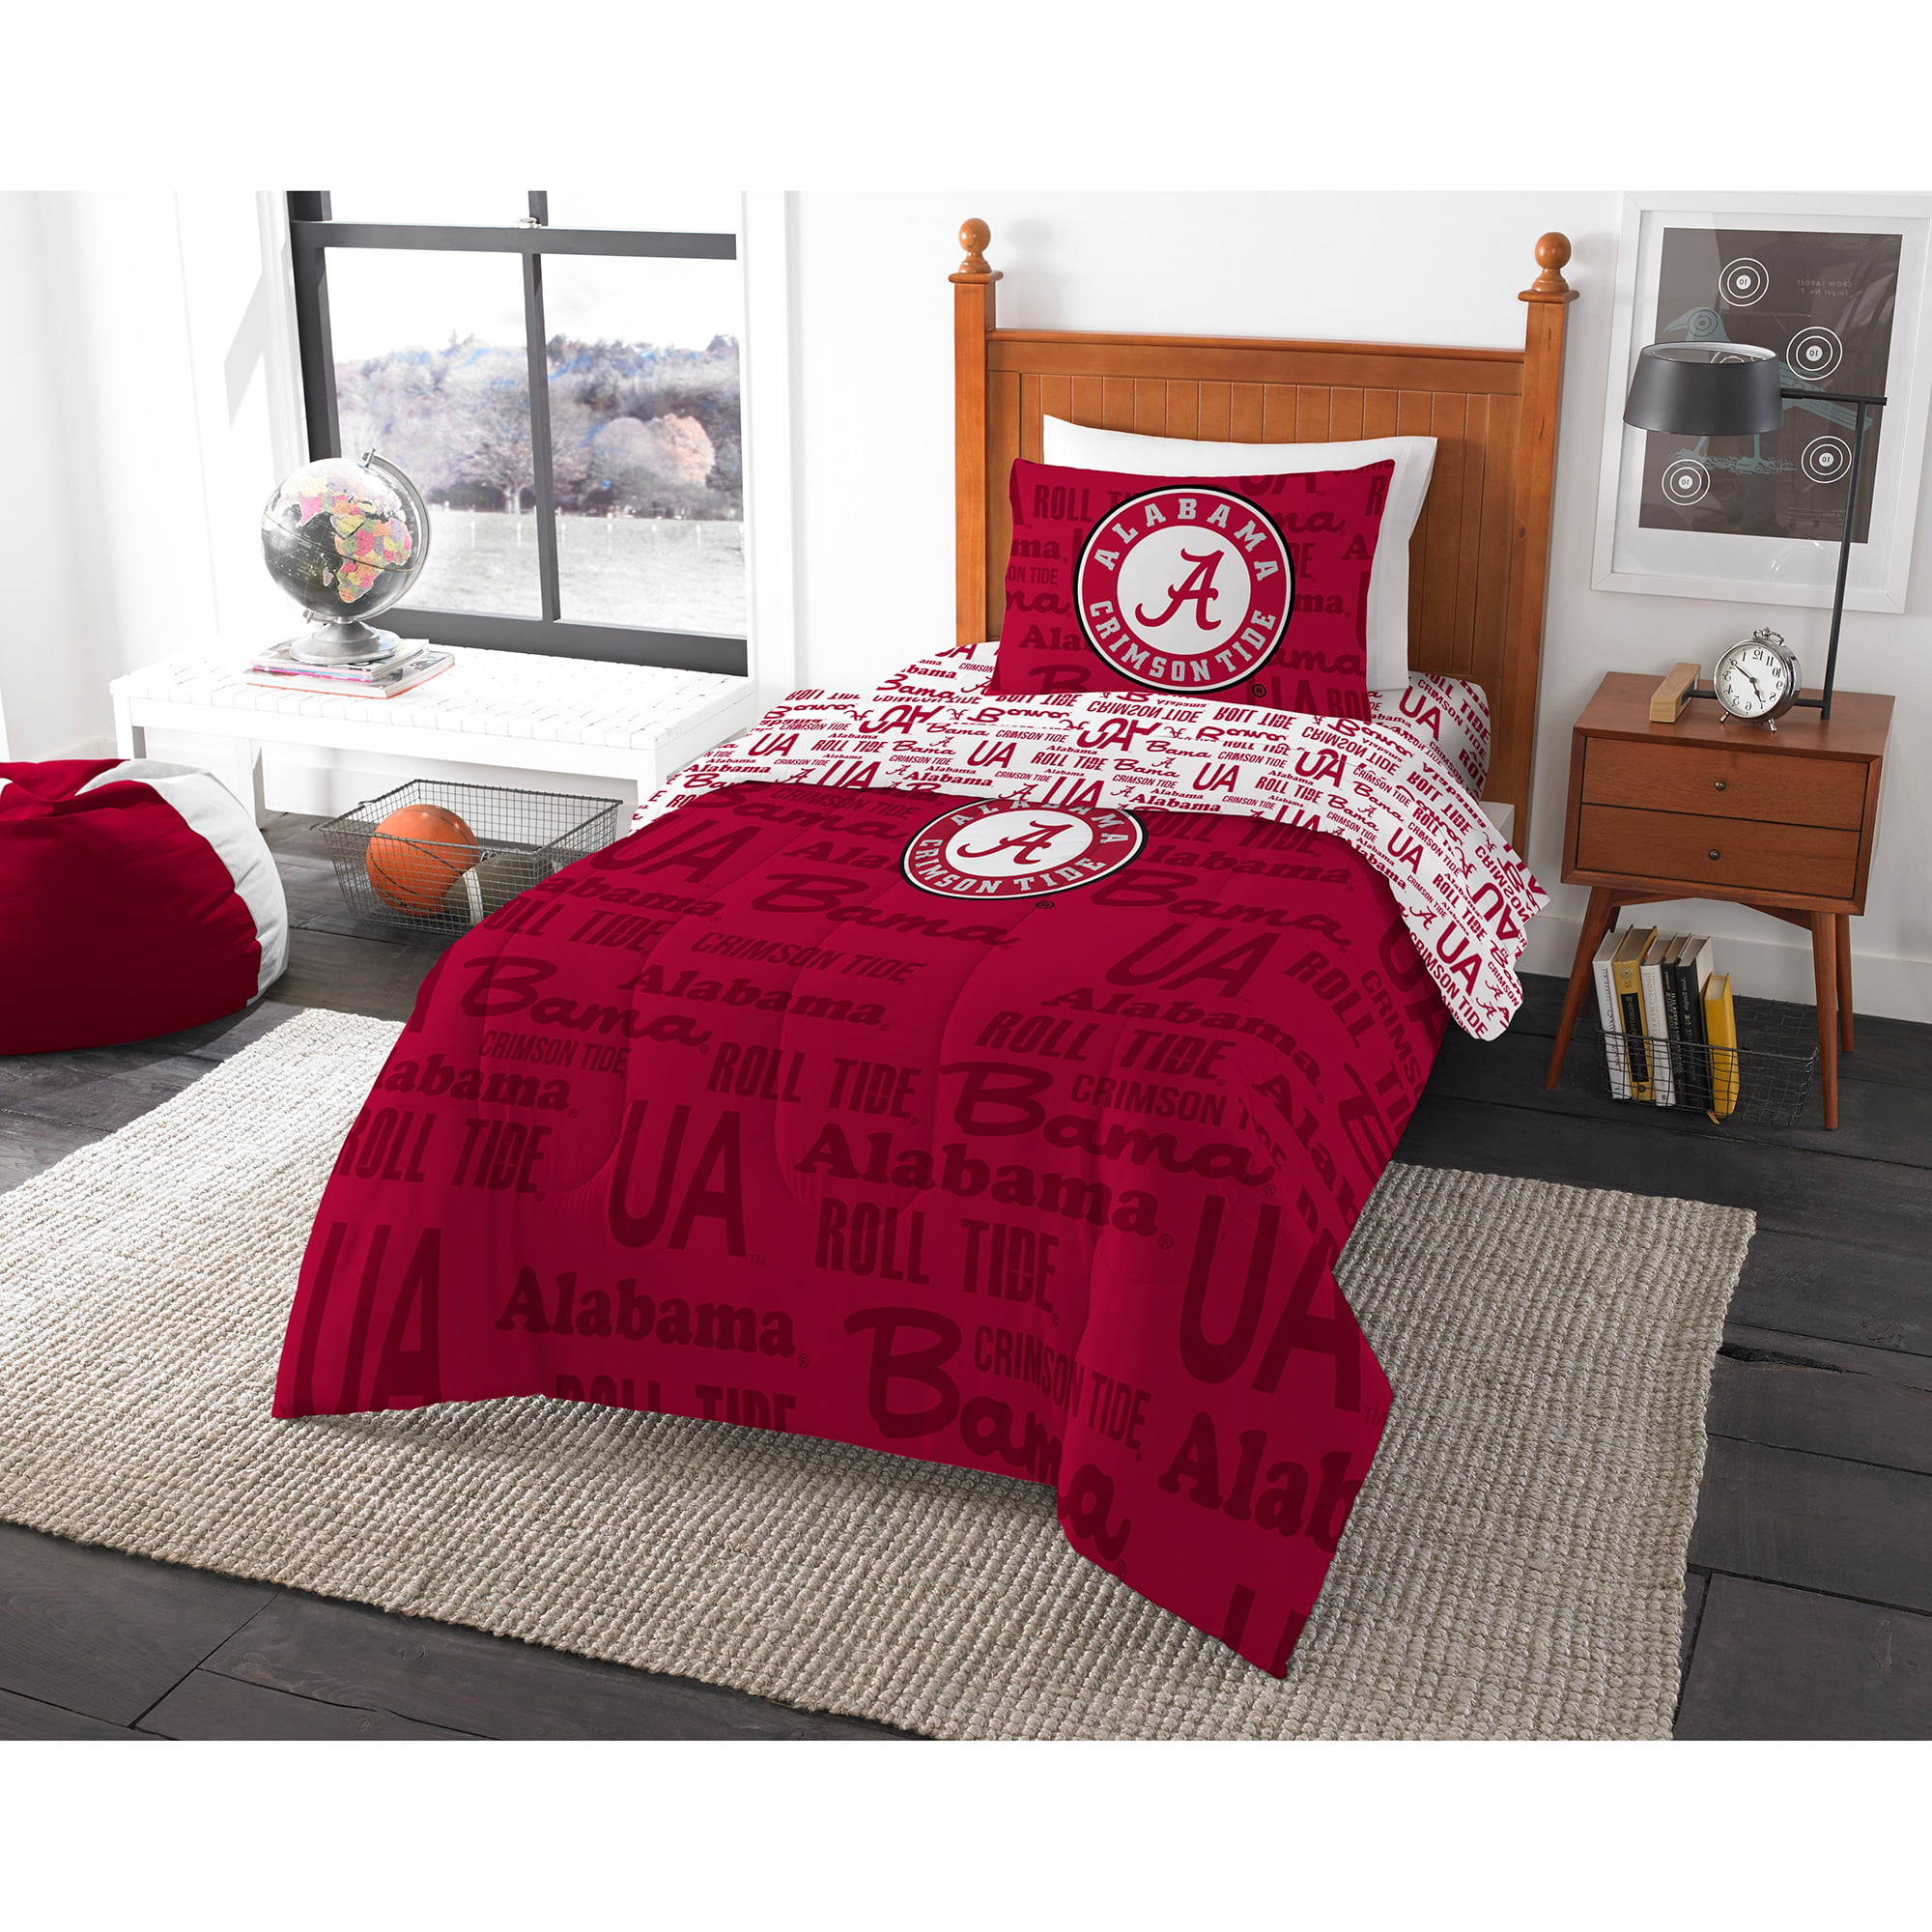 Alabama Crimson Tide 3 Pc KING Printed Comforter & Shams NCAA College Bedding 